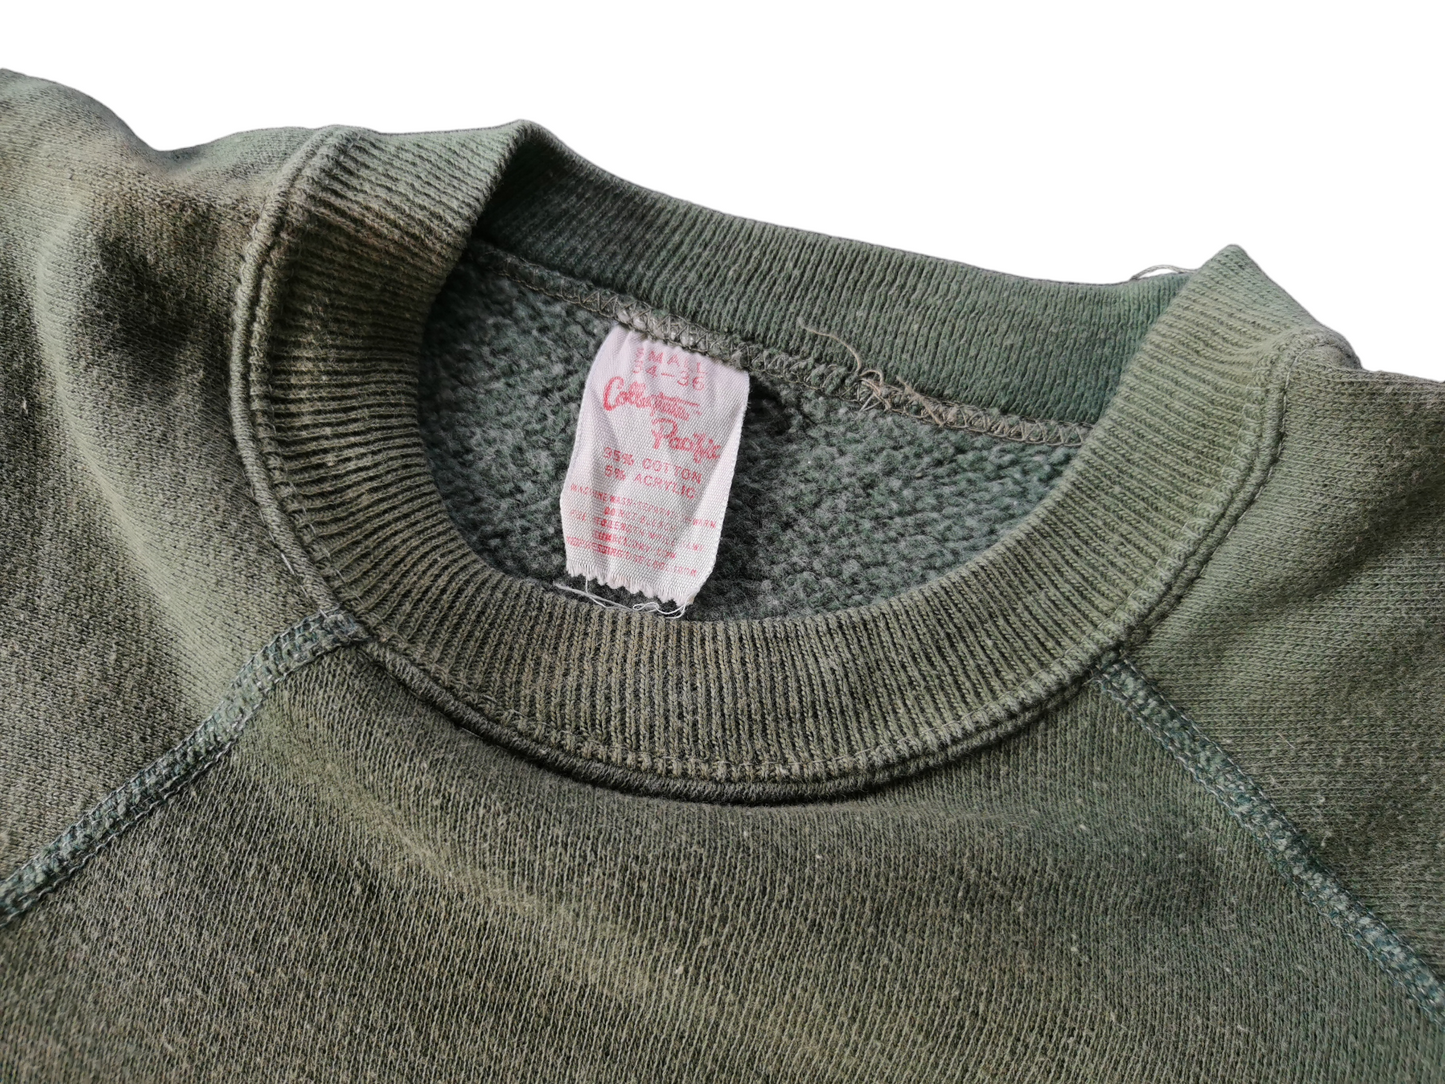 60s Vintage MIAMI University faded sweatshirt